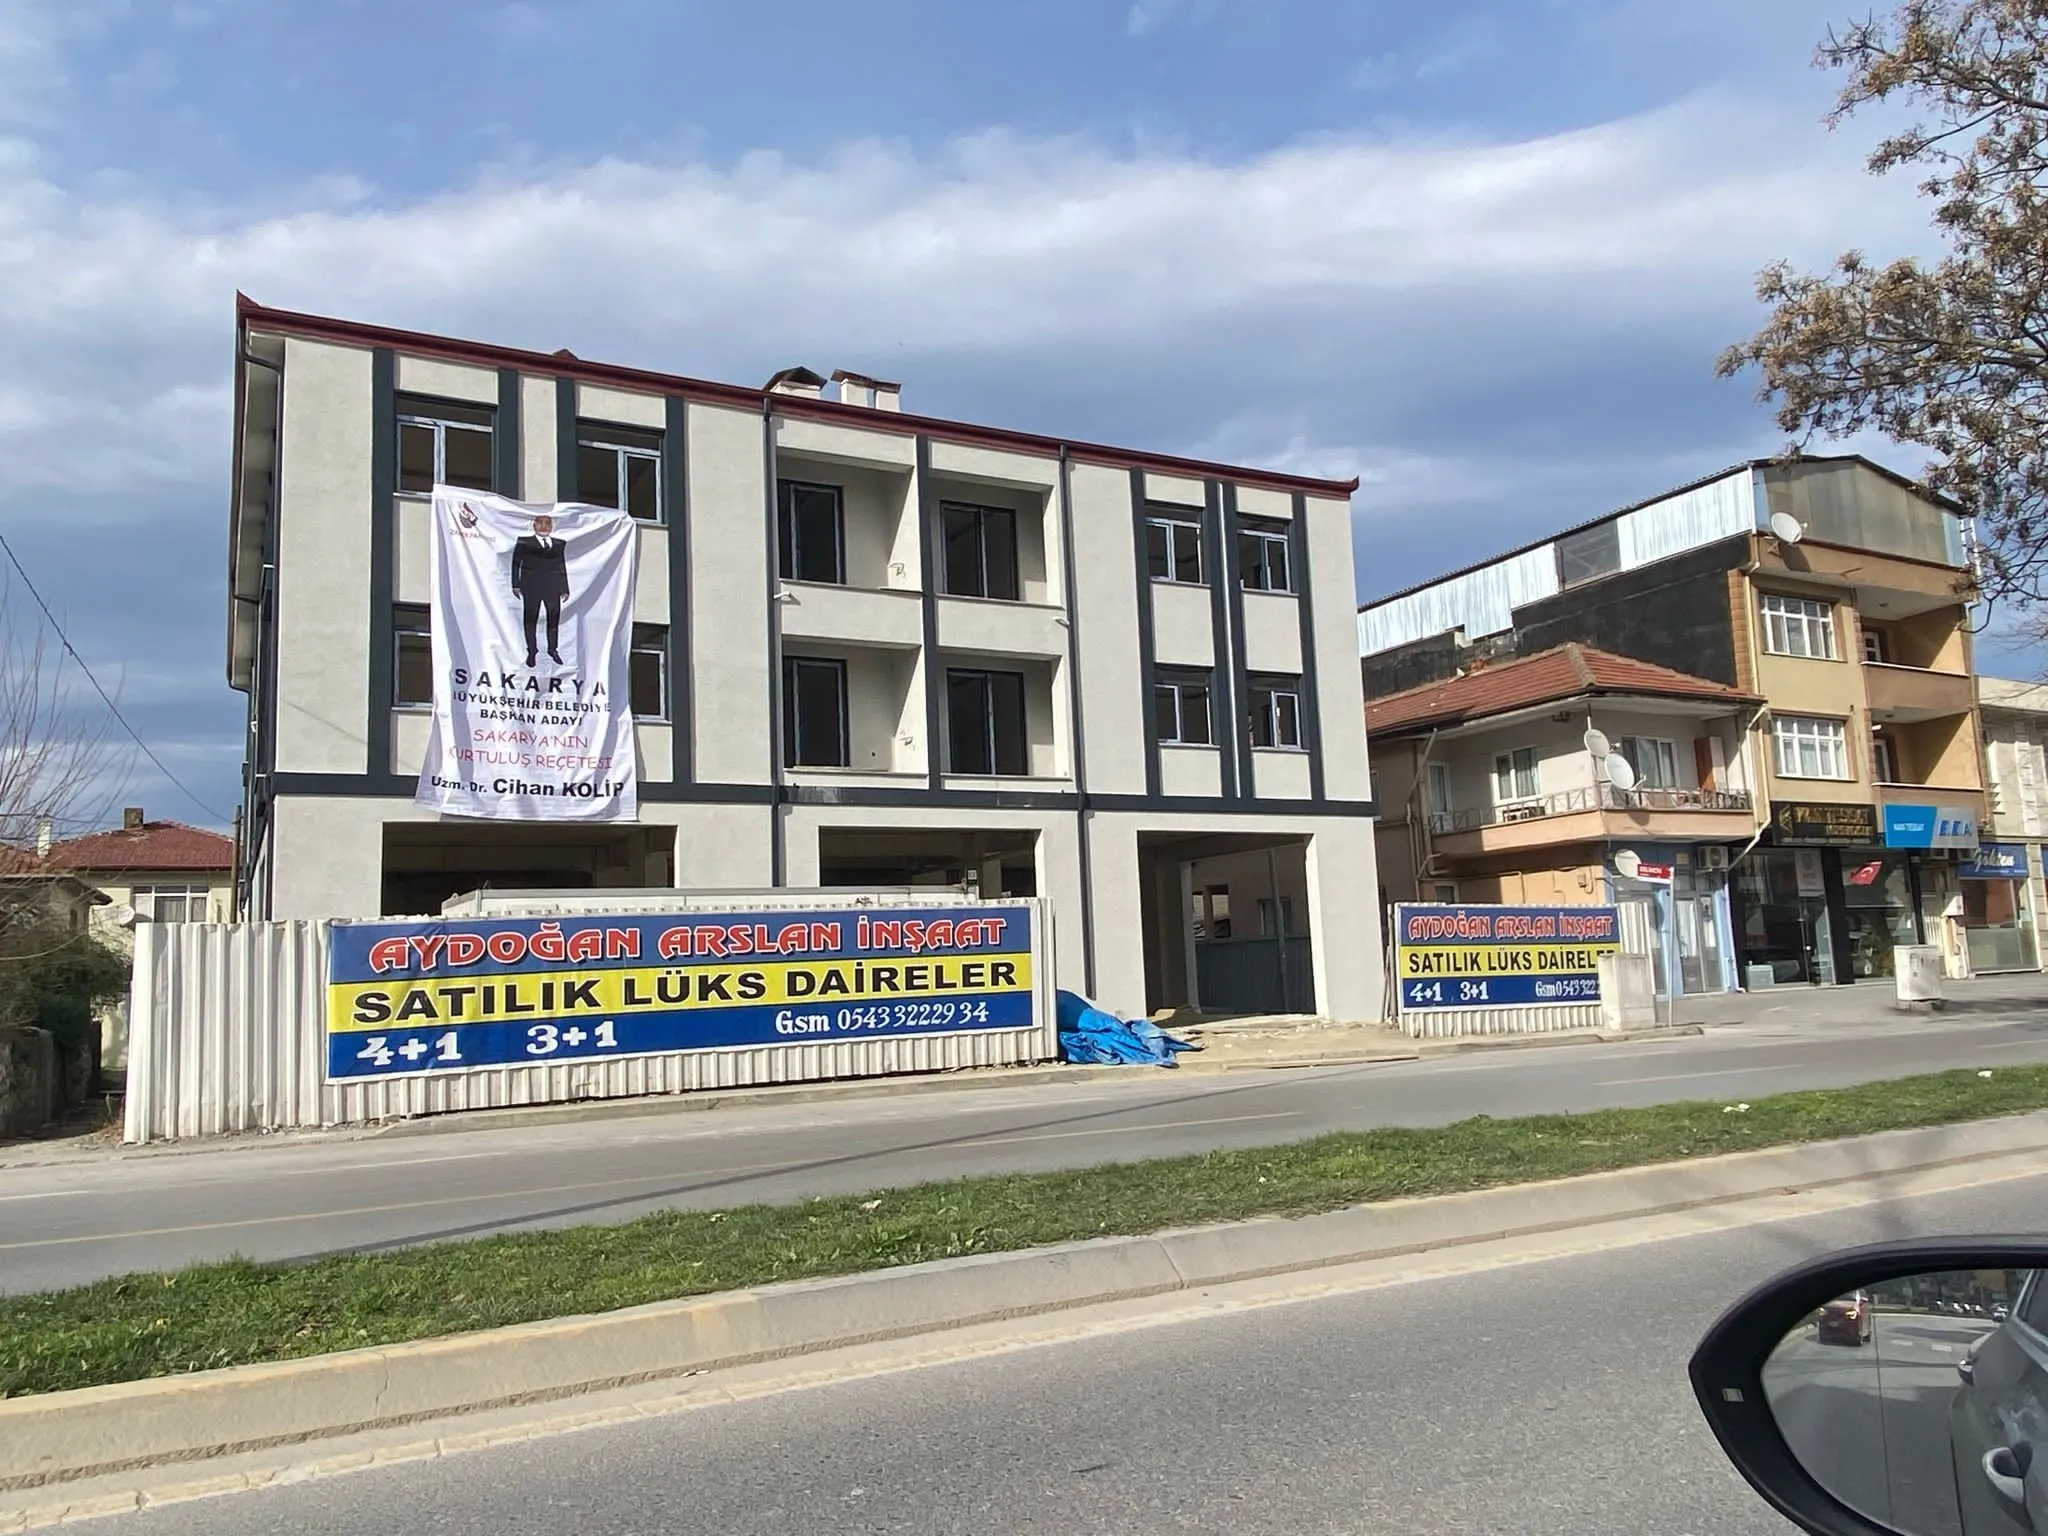 Aydoğan Arslan'ın Binasına Cihan Kolip Pankartı!